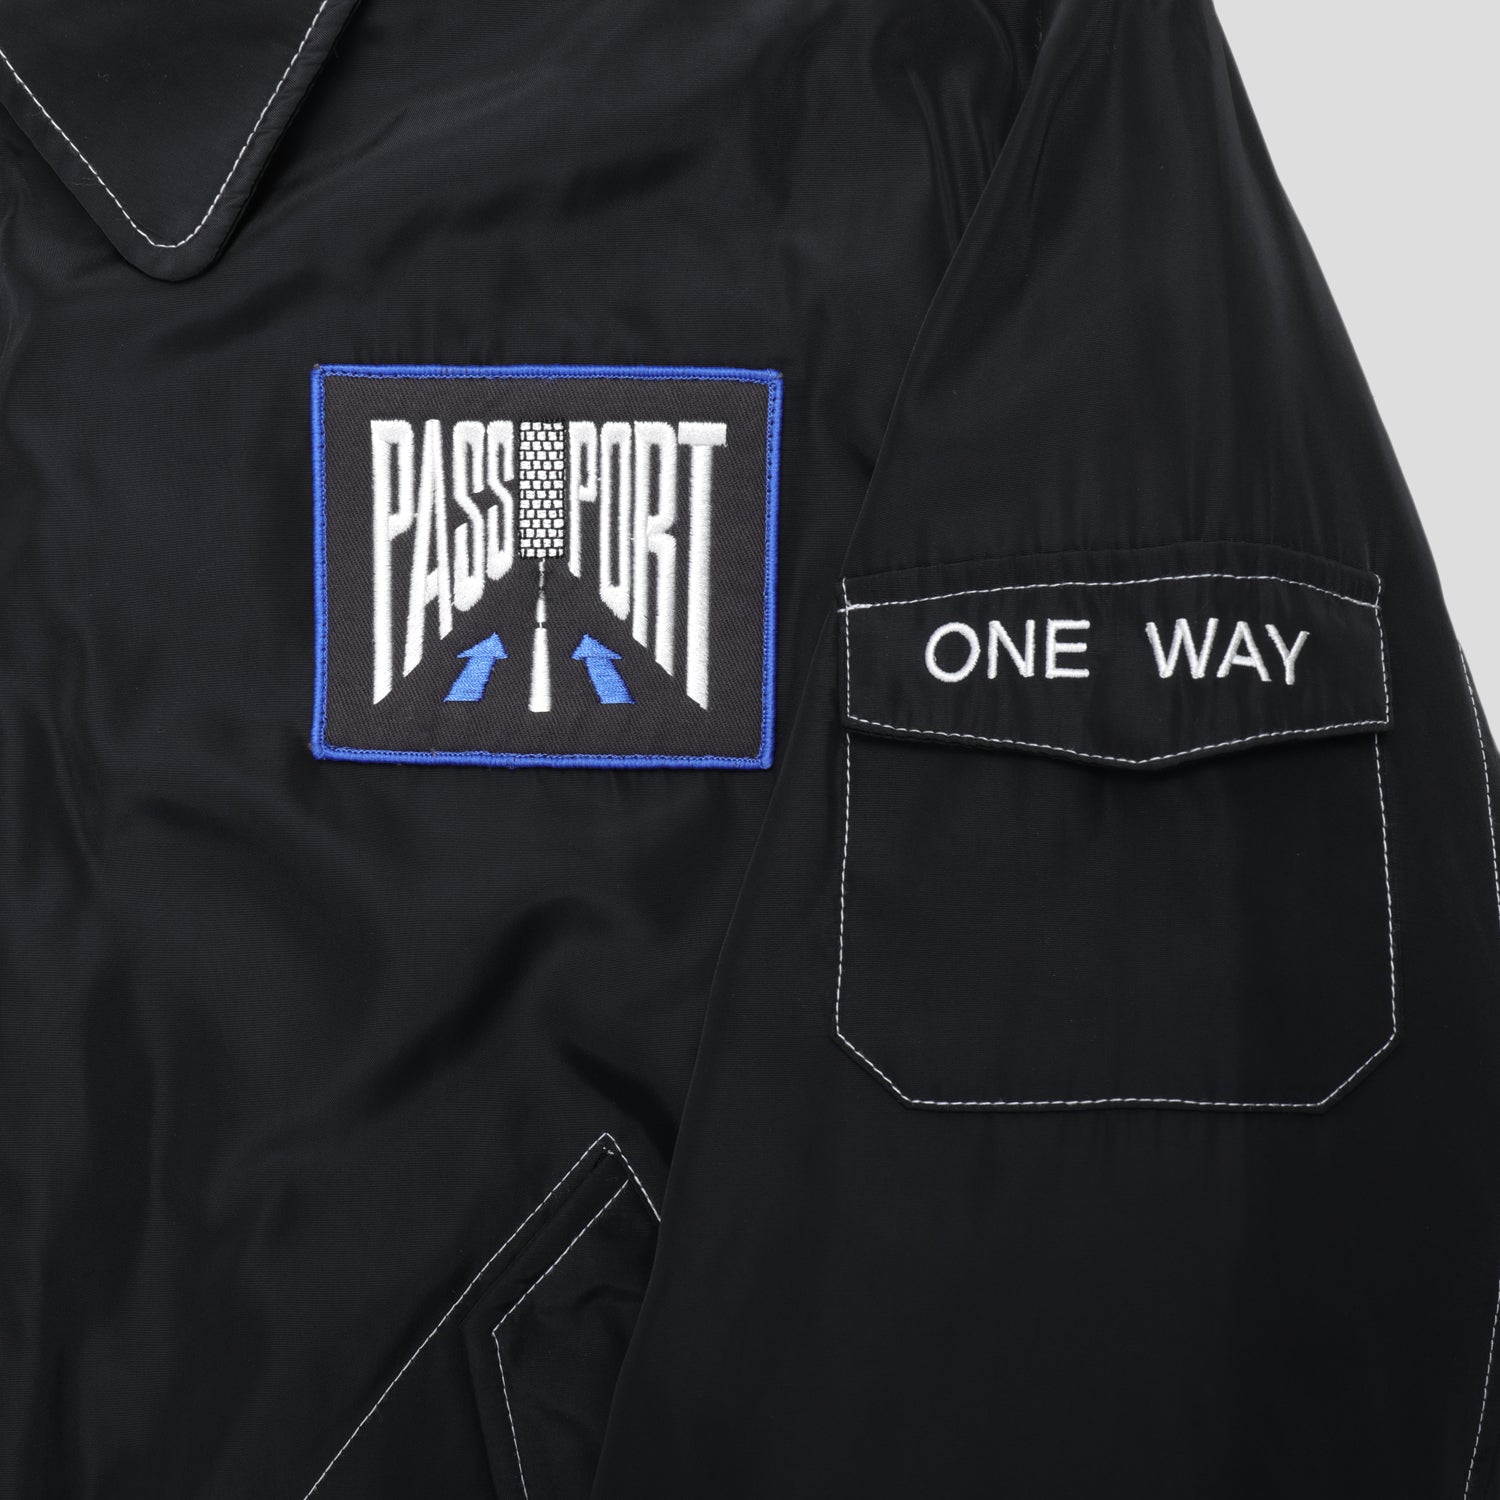 Pass~Port One Way Freight Jacket - Black